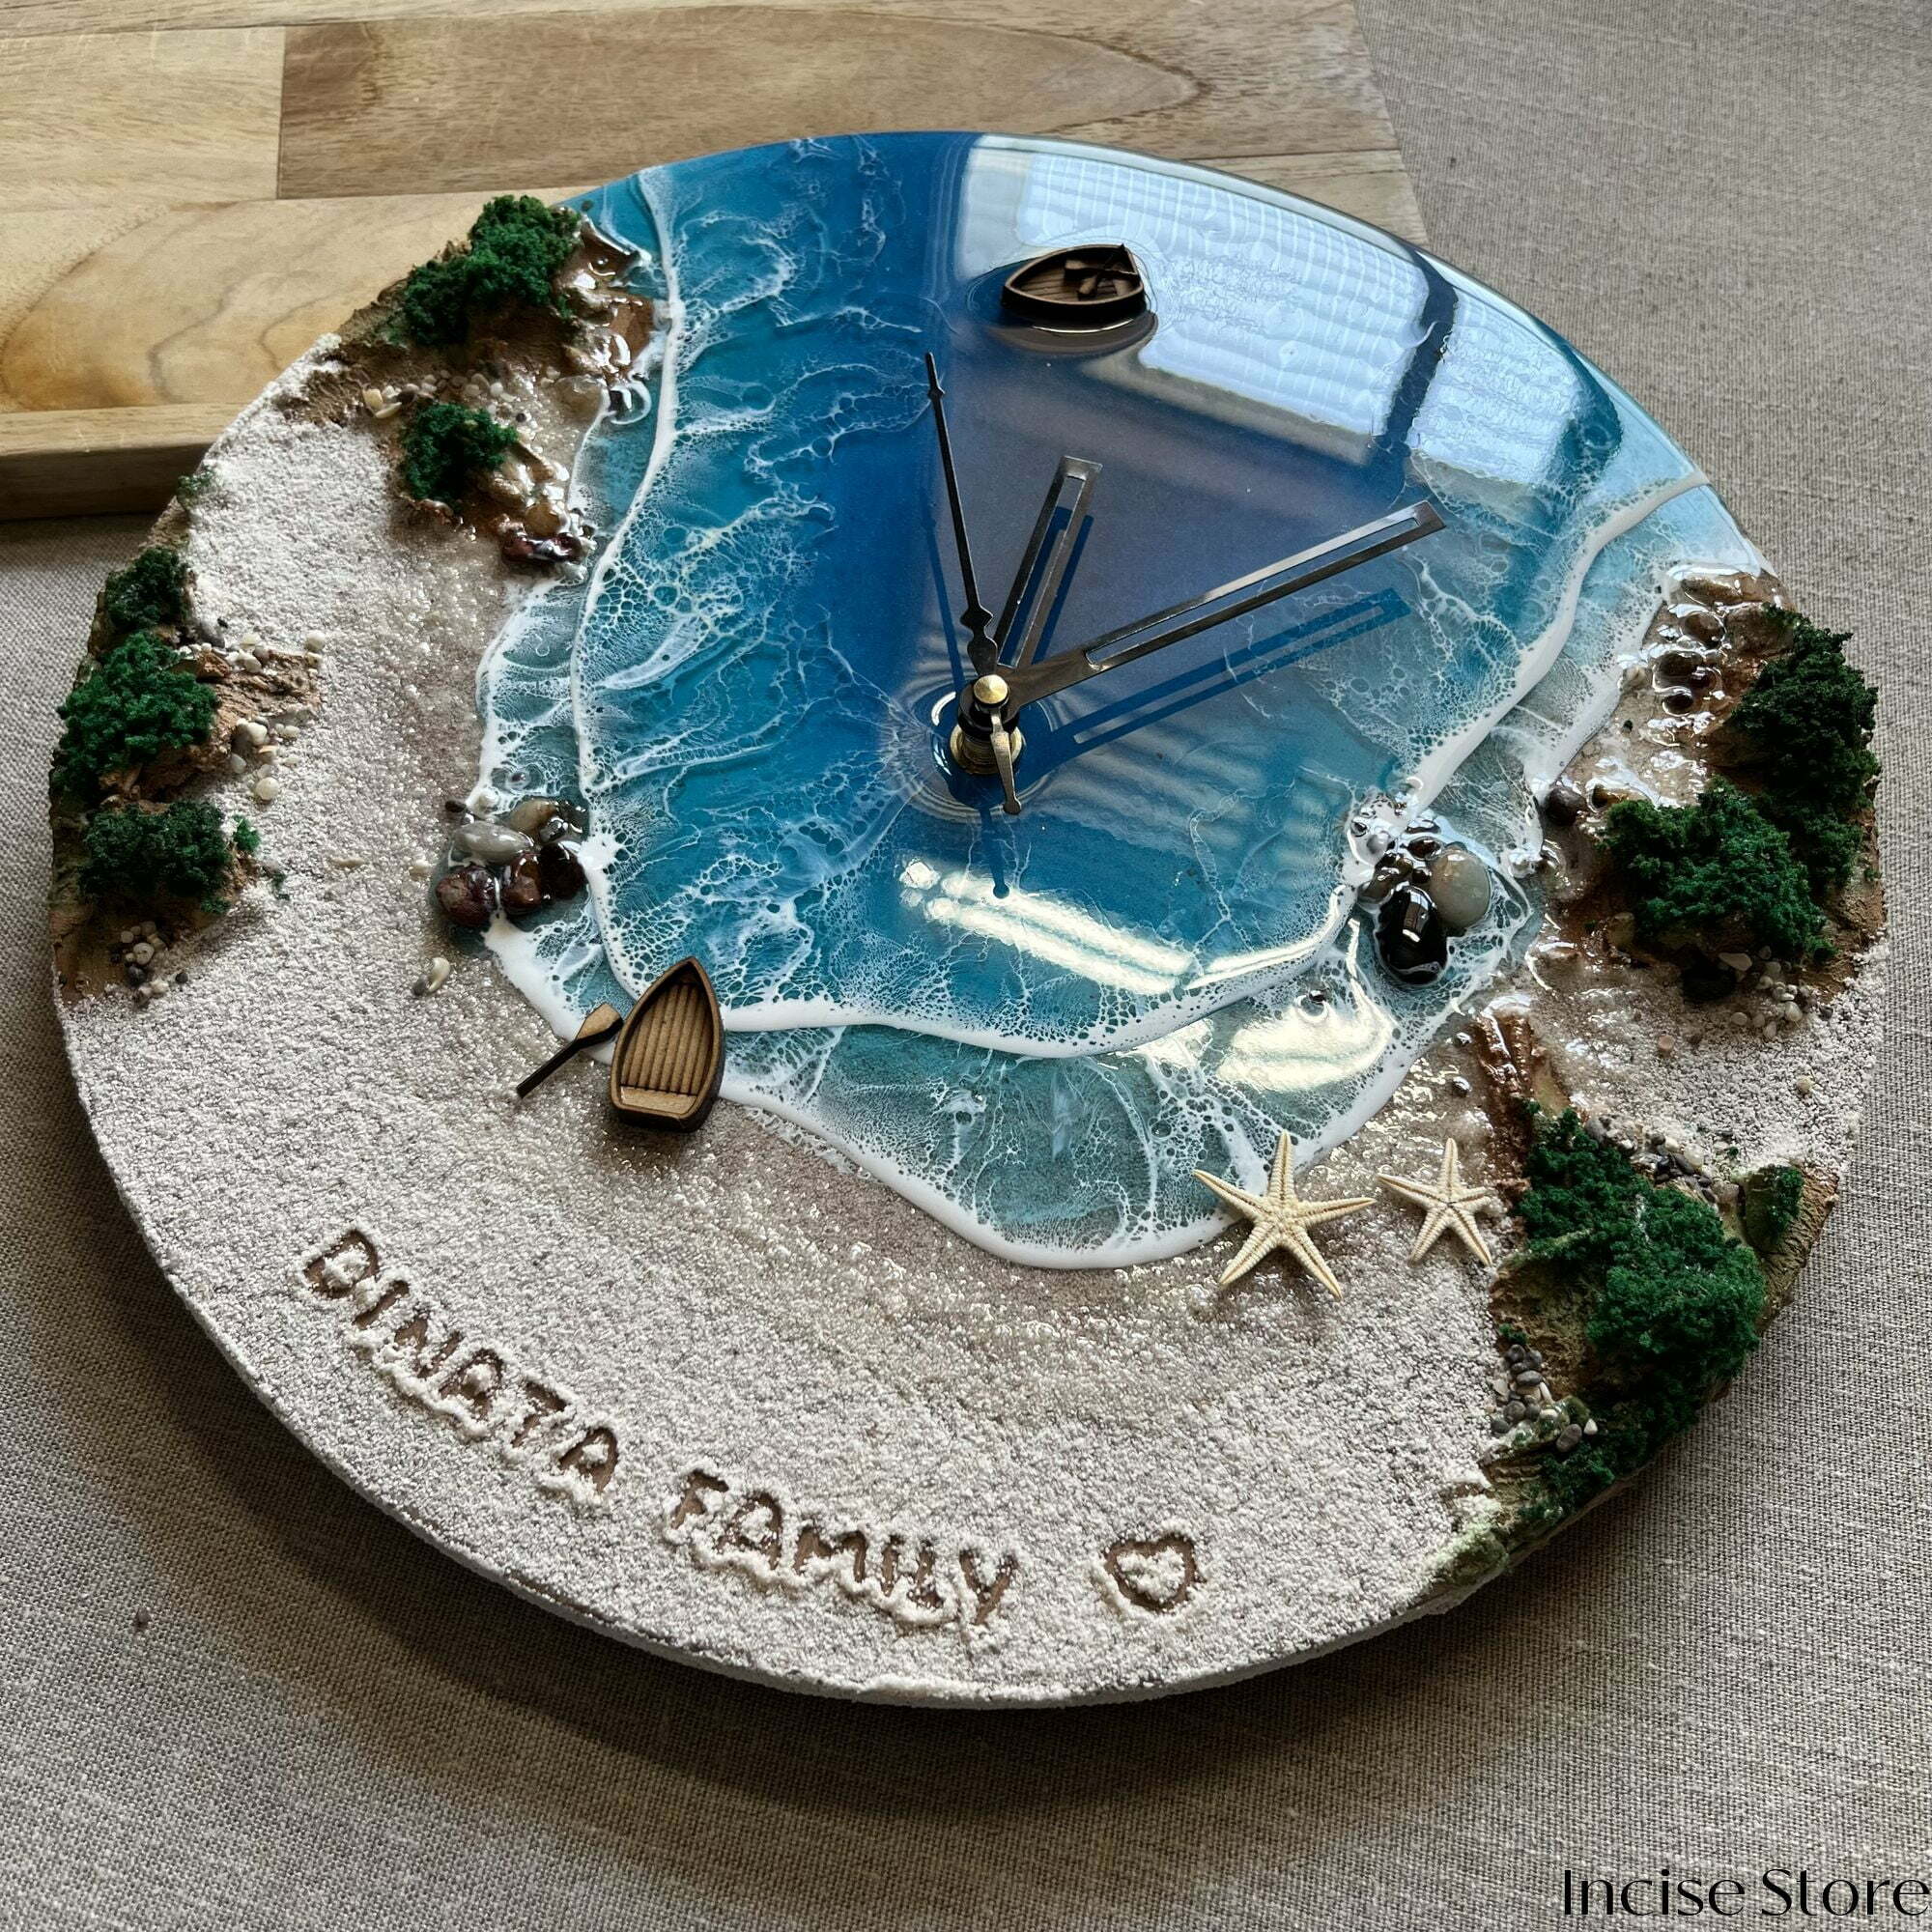 Gorgeous Resin Beach Clock From a Mold: DIY Resin Art Tutorial